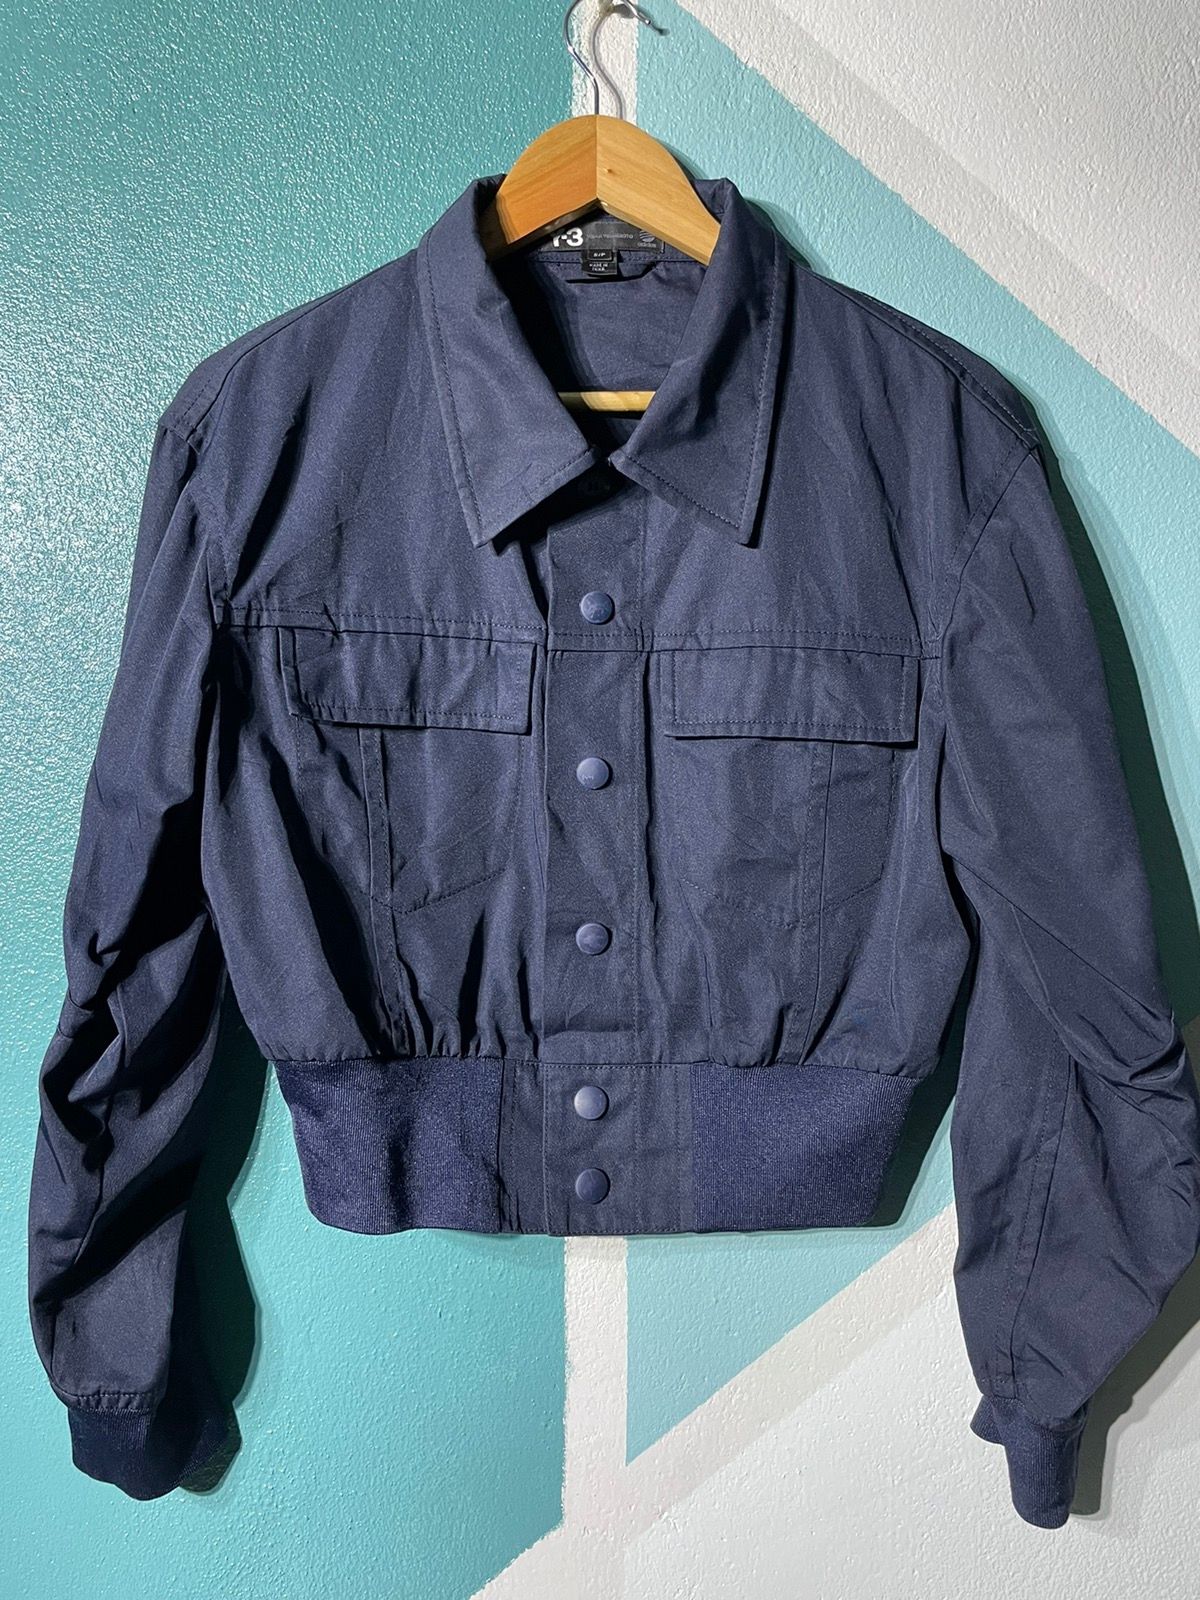 DELETE IN 24h‼️ Adidas Y-3 cropped jacket - 1